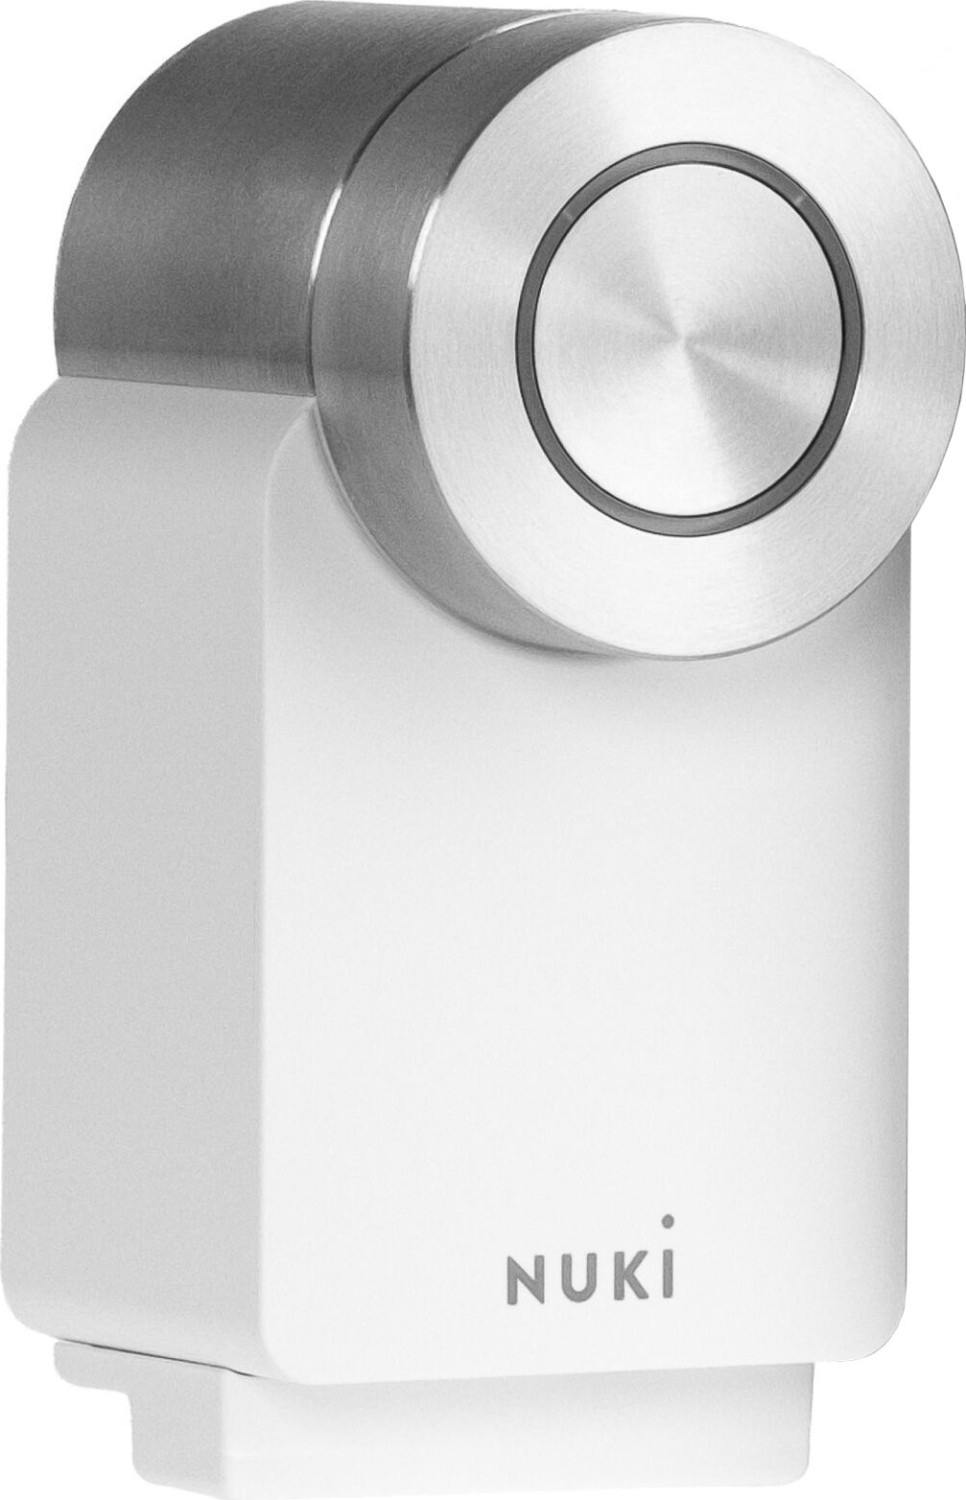 Nuki Smart Lock 4.0 Pro white, electronic door lock